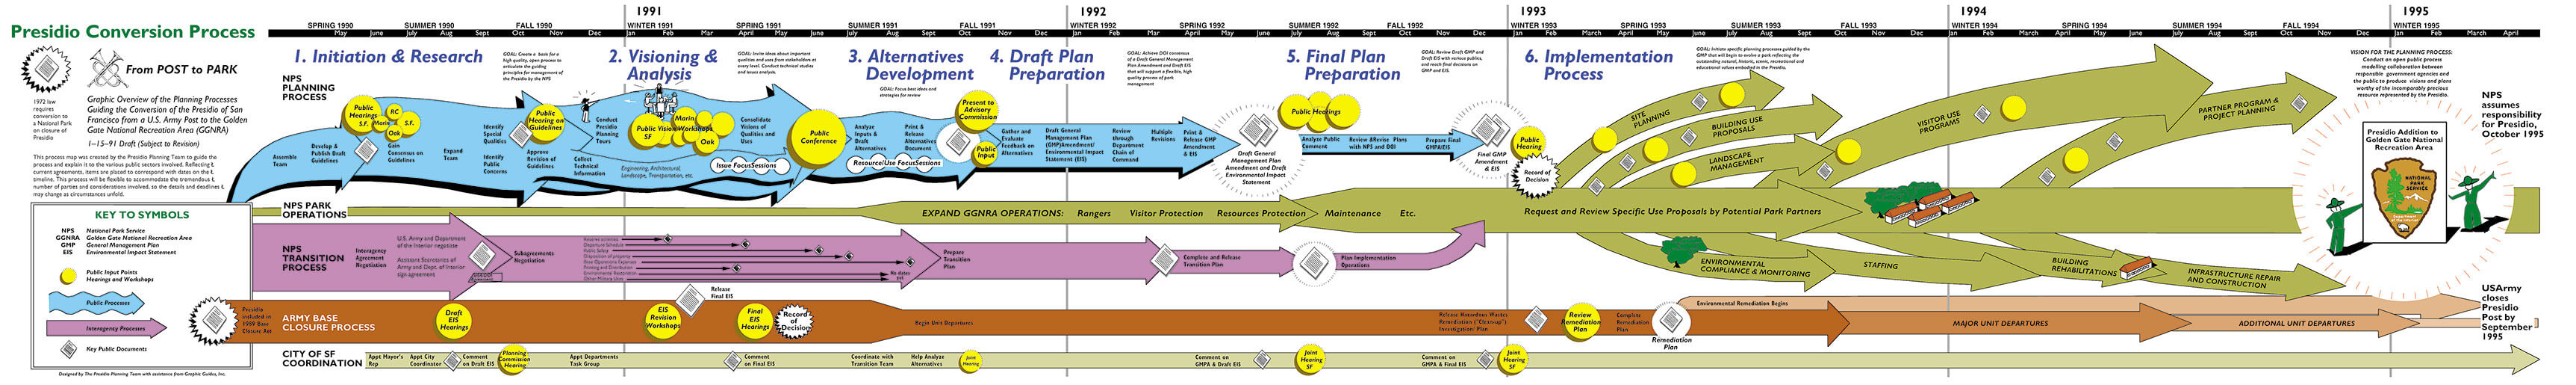 Presidio Conversion Process Map - Portfolio - David Sibbet